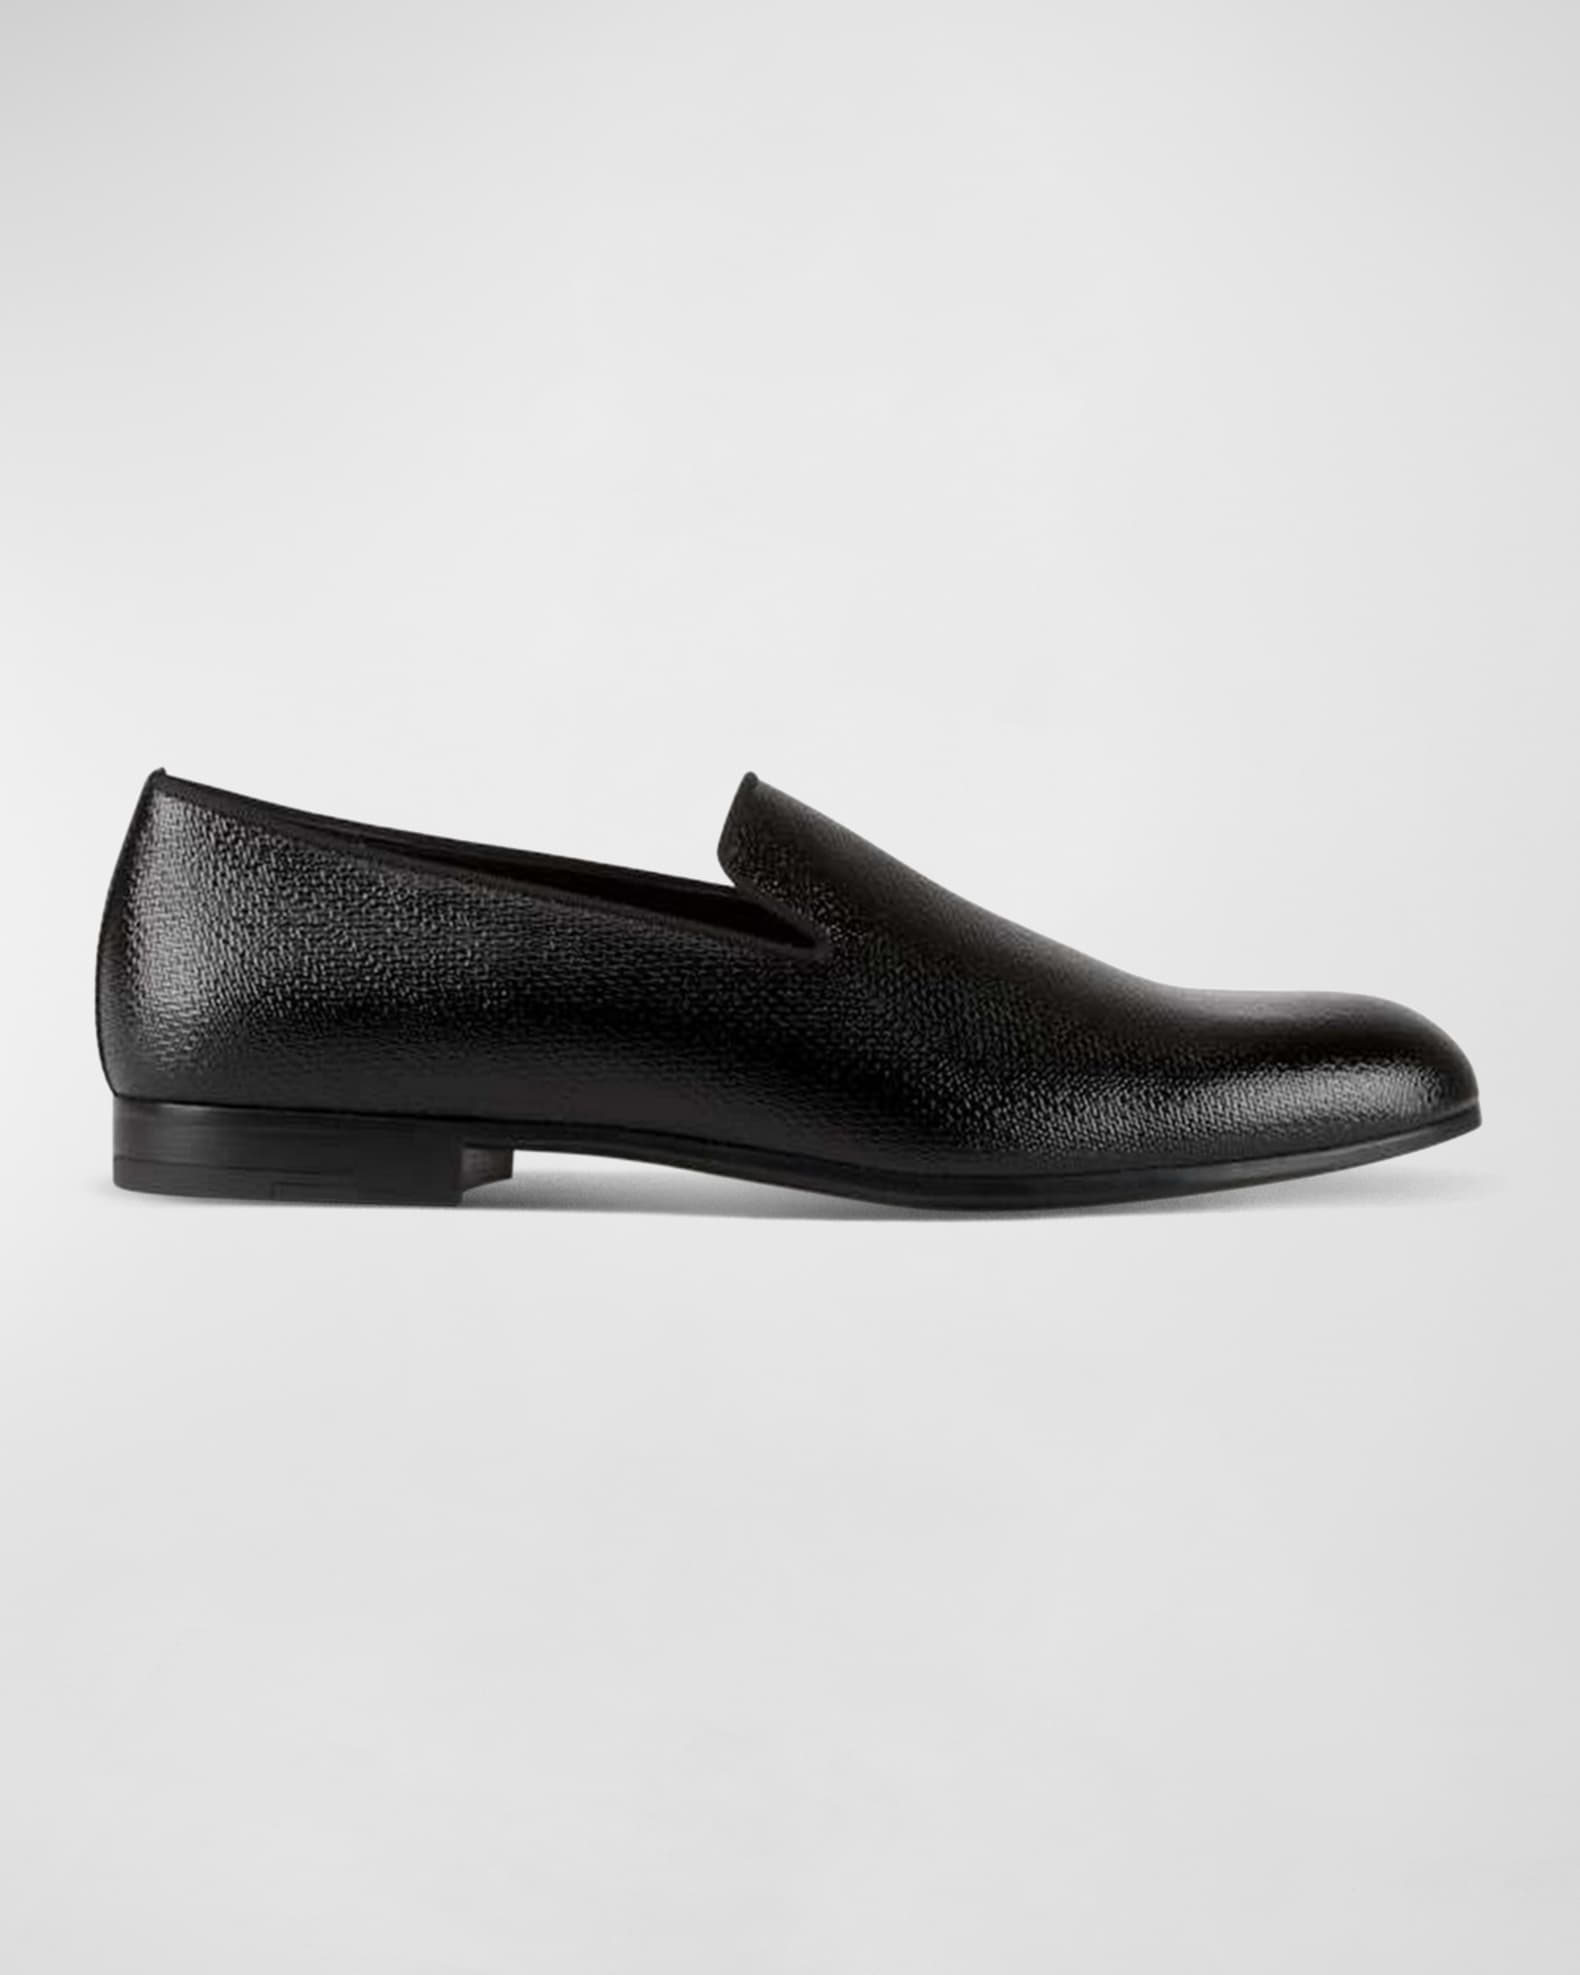 Giorgio Armani Men's Textured Formal Smoking Slippers | Neiman Marcus